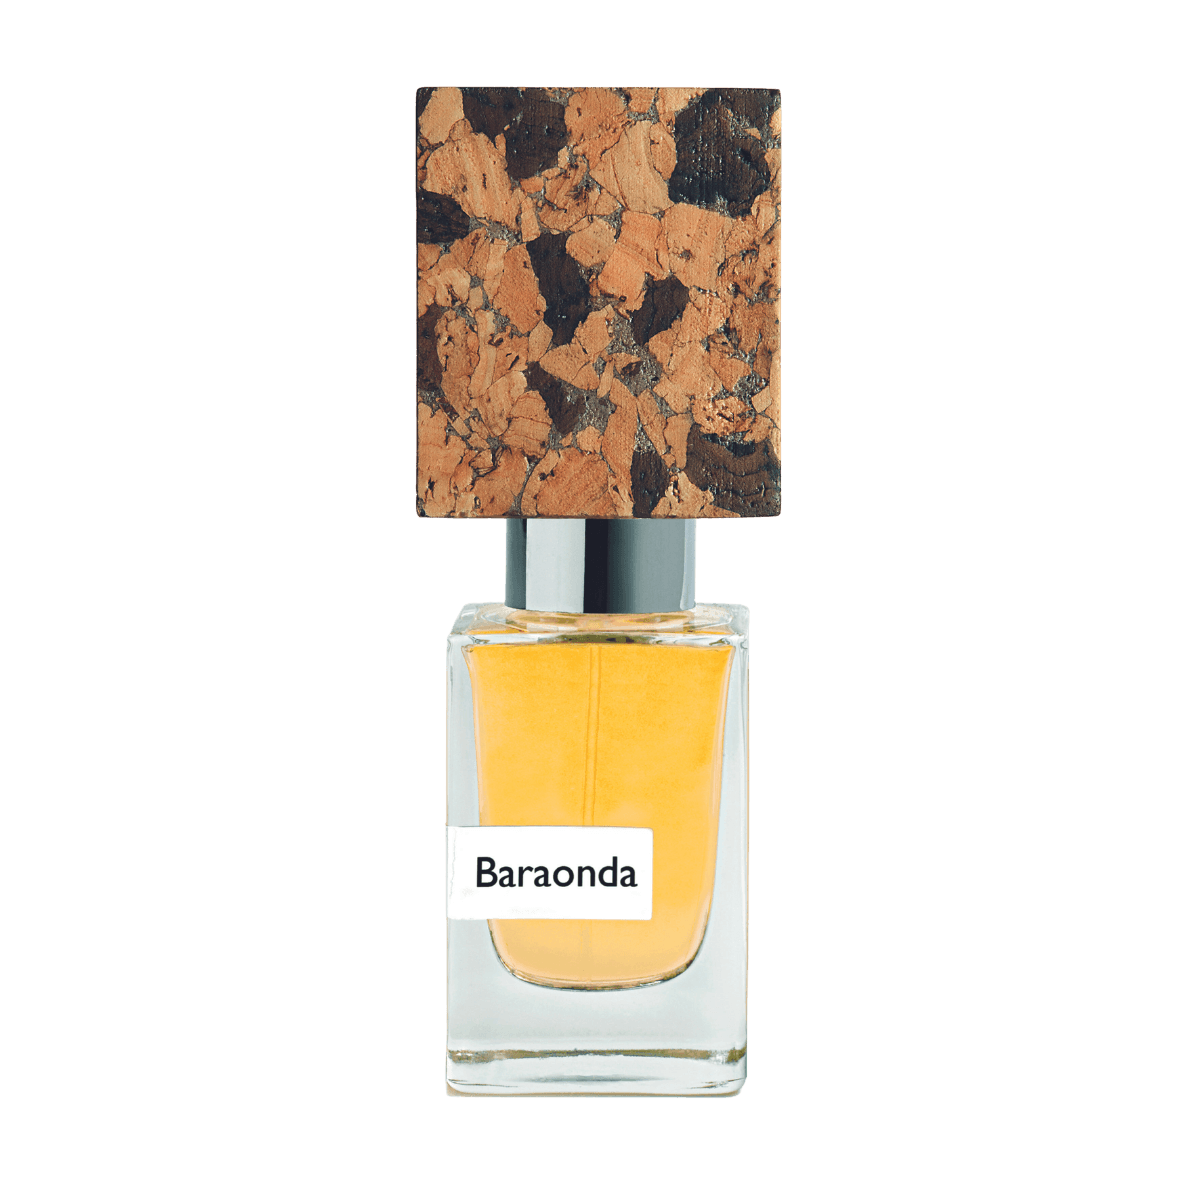 Image of Baraonda extrait de parfum 30 ml by the perfume brand Nasomatto